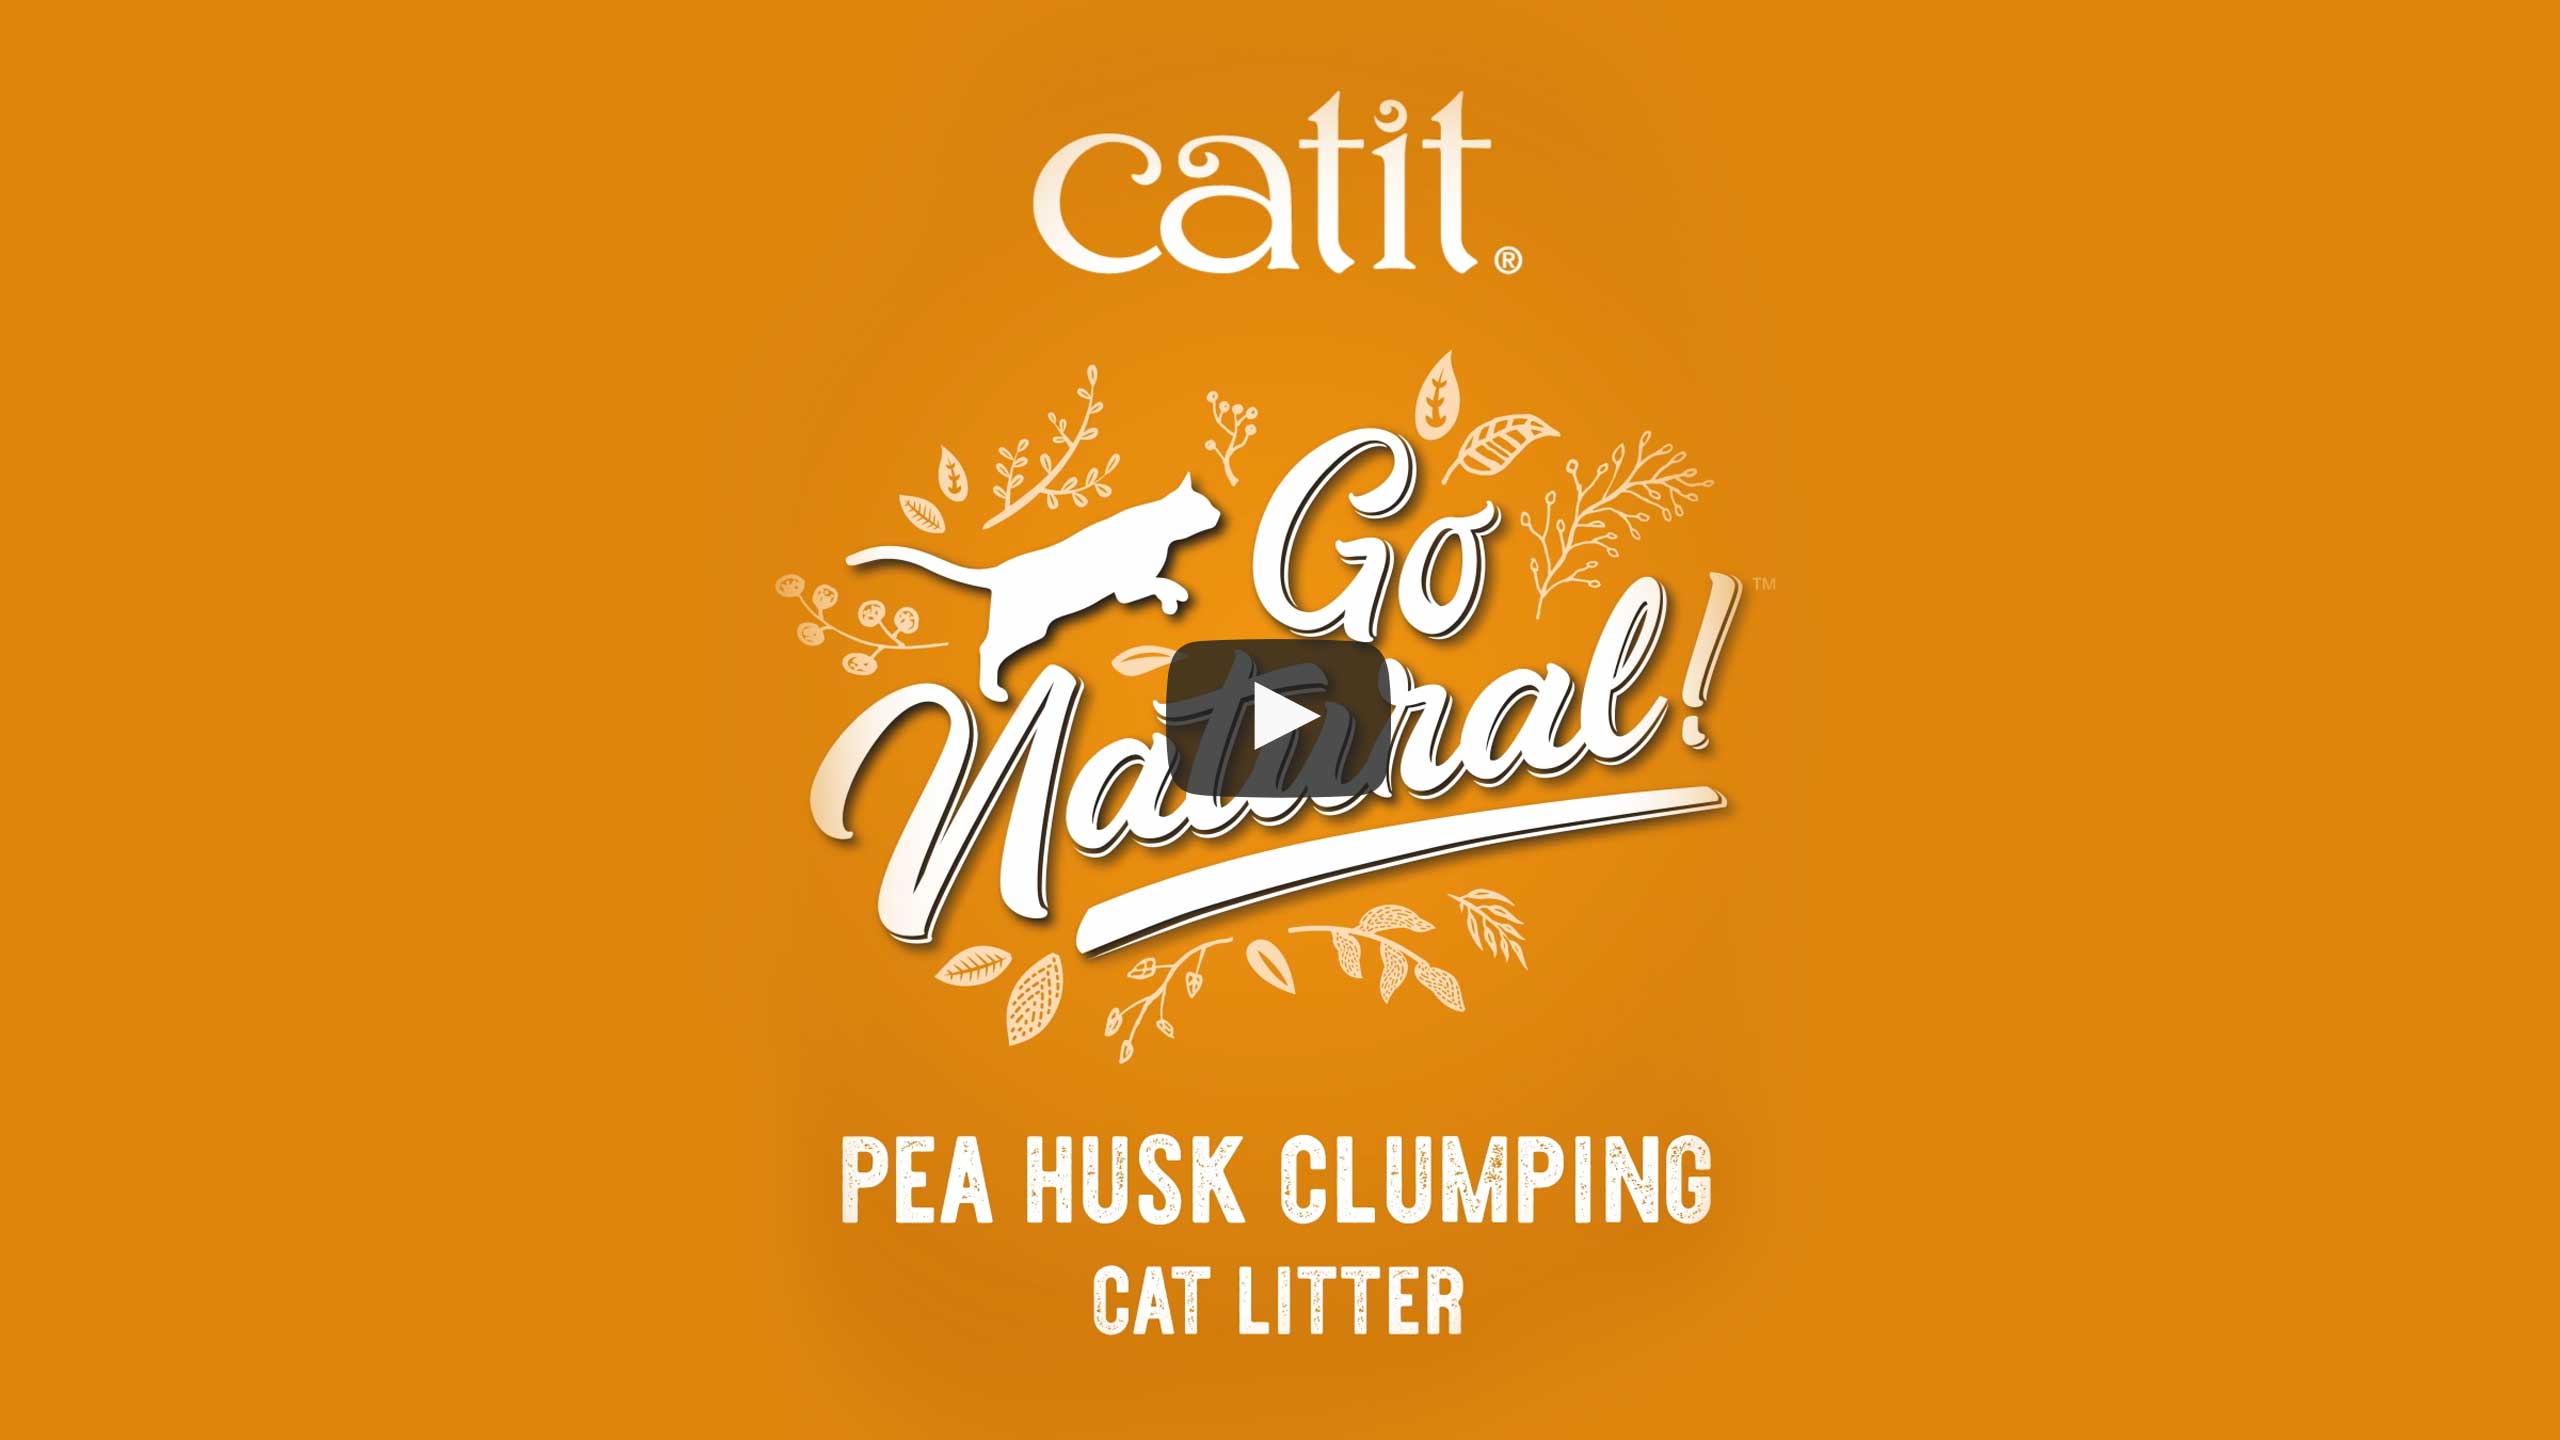 Catit Go Natural Pea Husk Clumping Cat Litter video